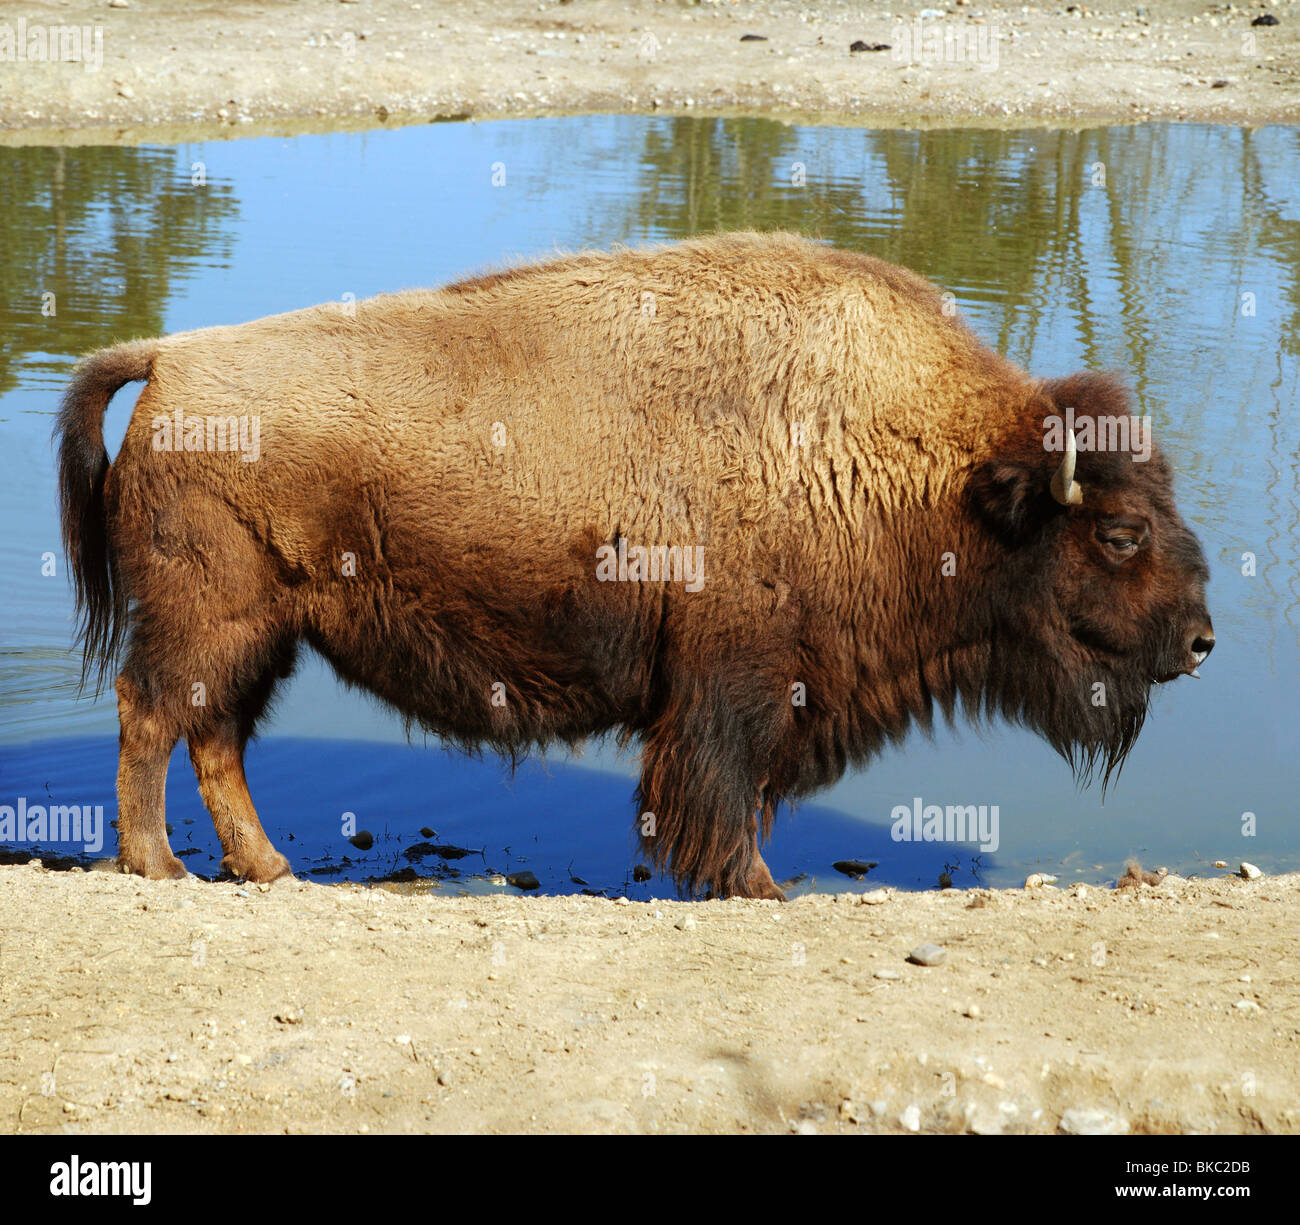 Bufalo americano - Bison bison Foto Stock